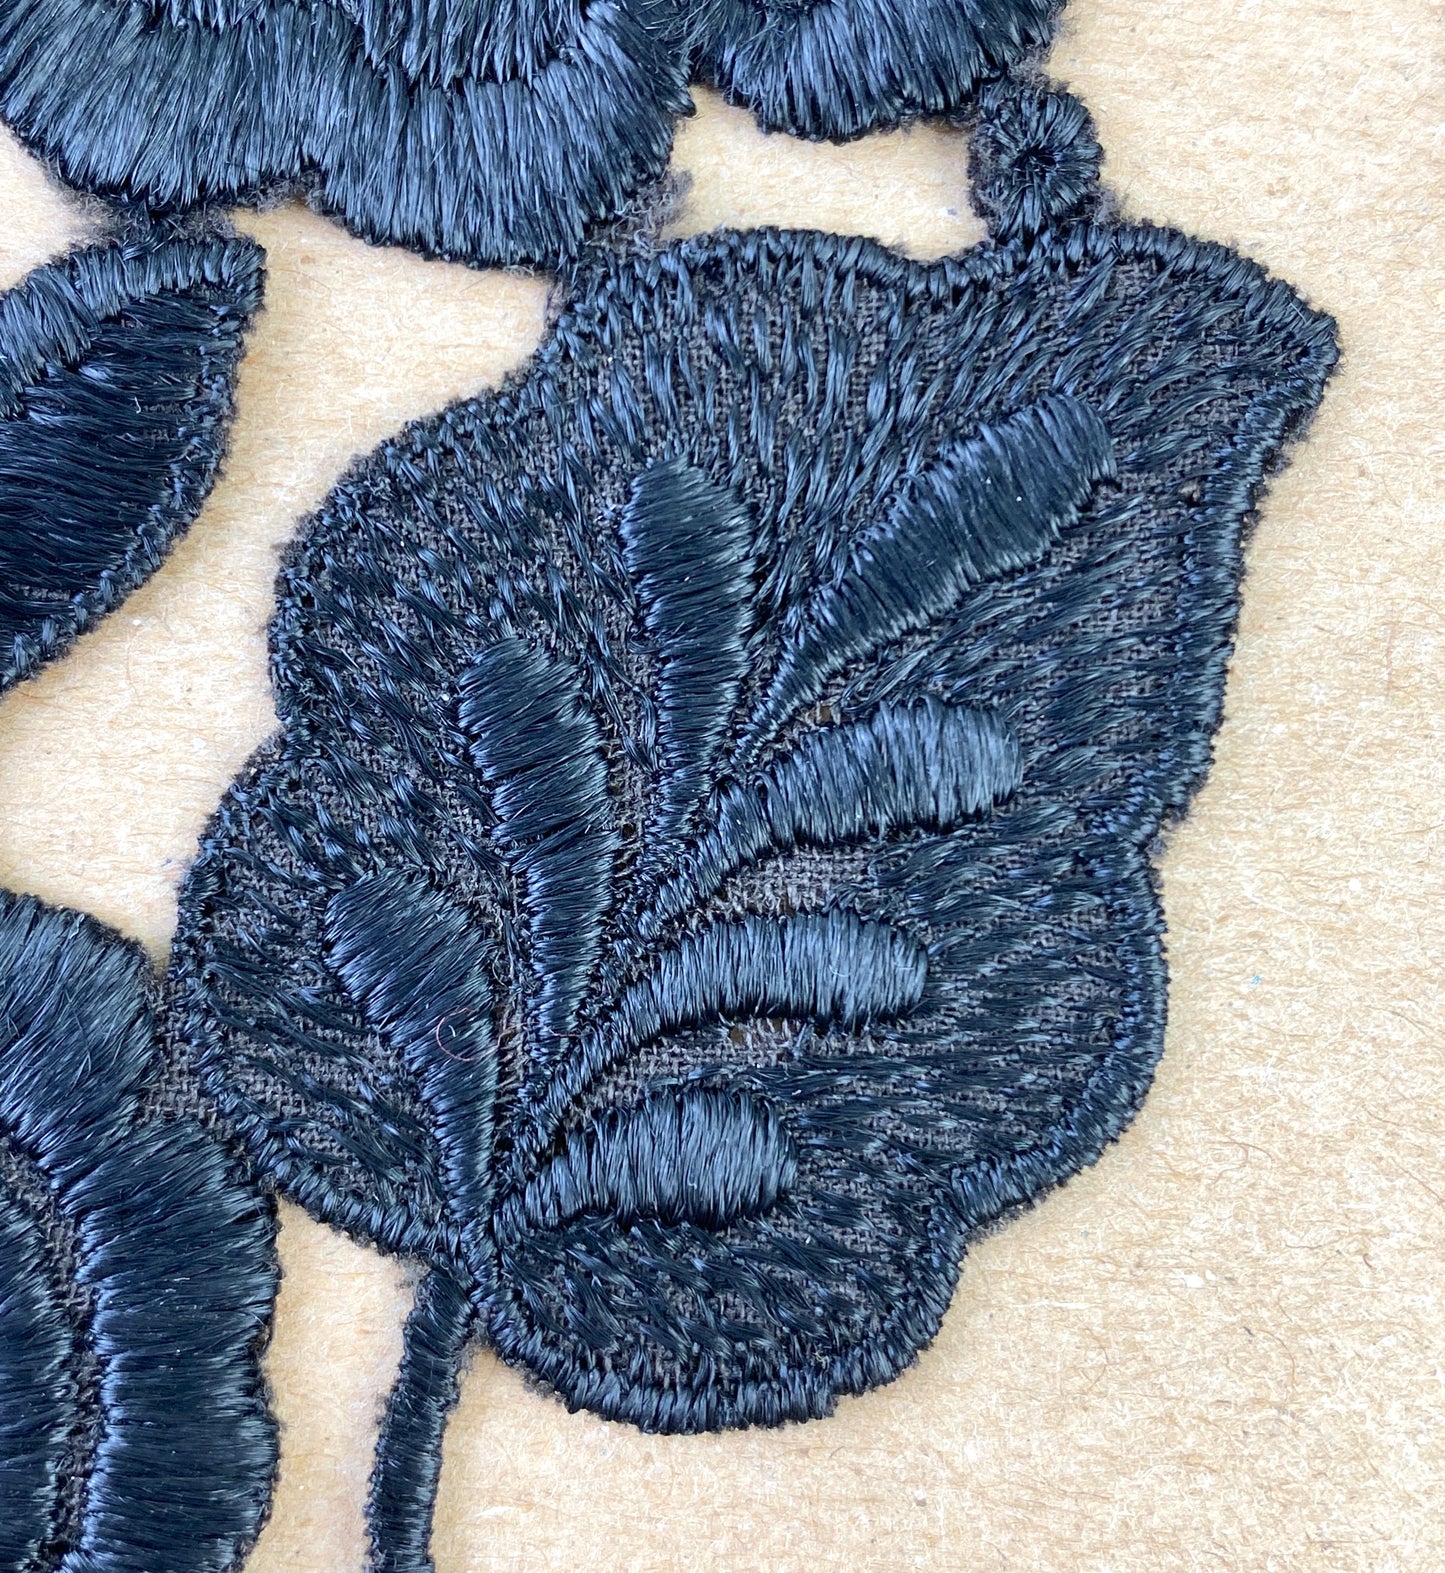 Antique Victorian Black Silk Floral Embroidered Appliqués, 4 Pieces